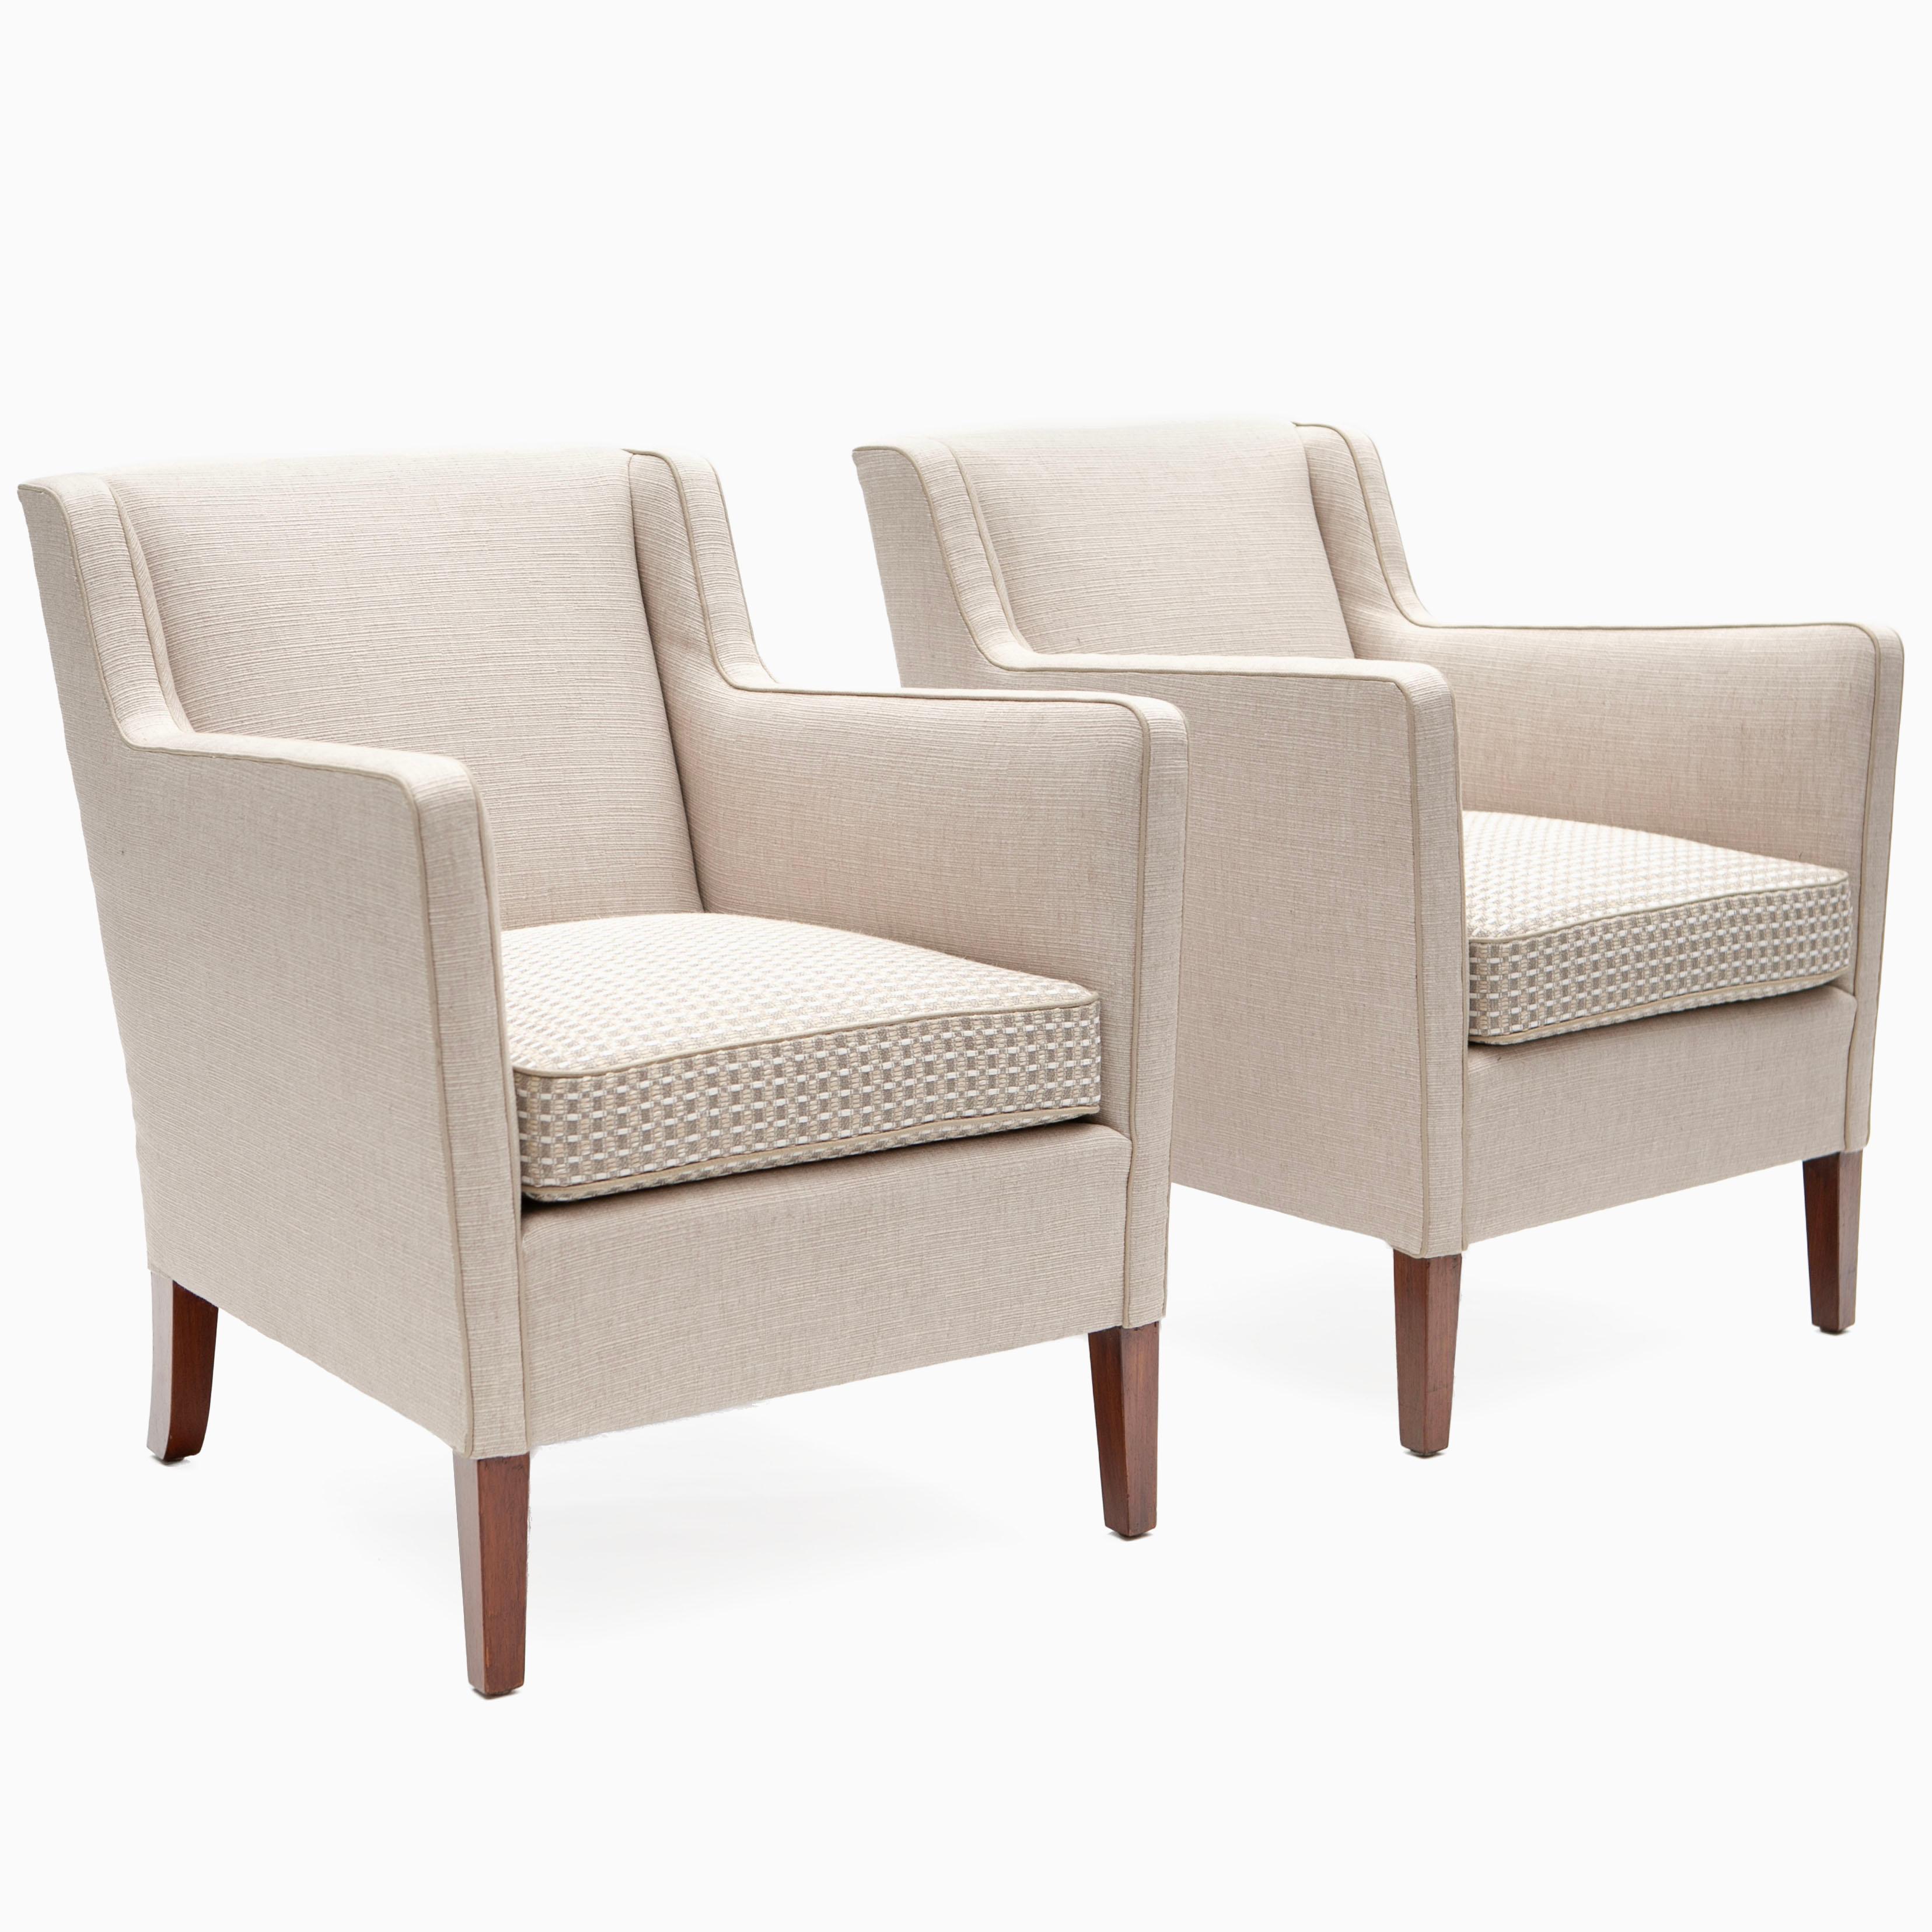 European Pair of Frits Henningsen Lounge Chairs Denmark 1950's For Sale